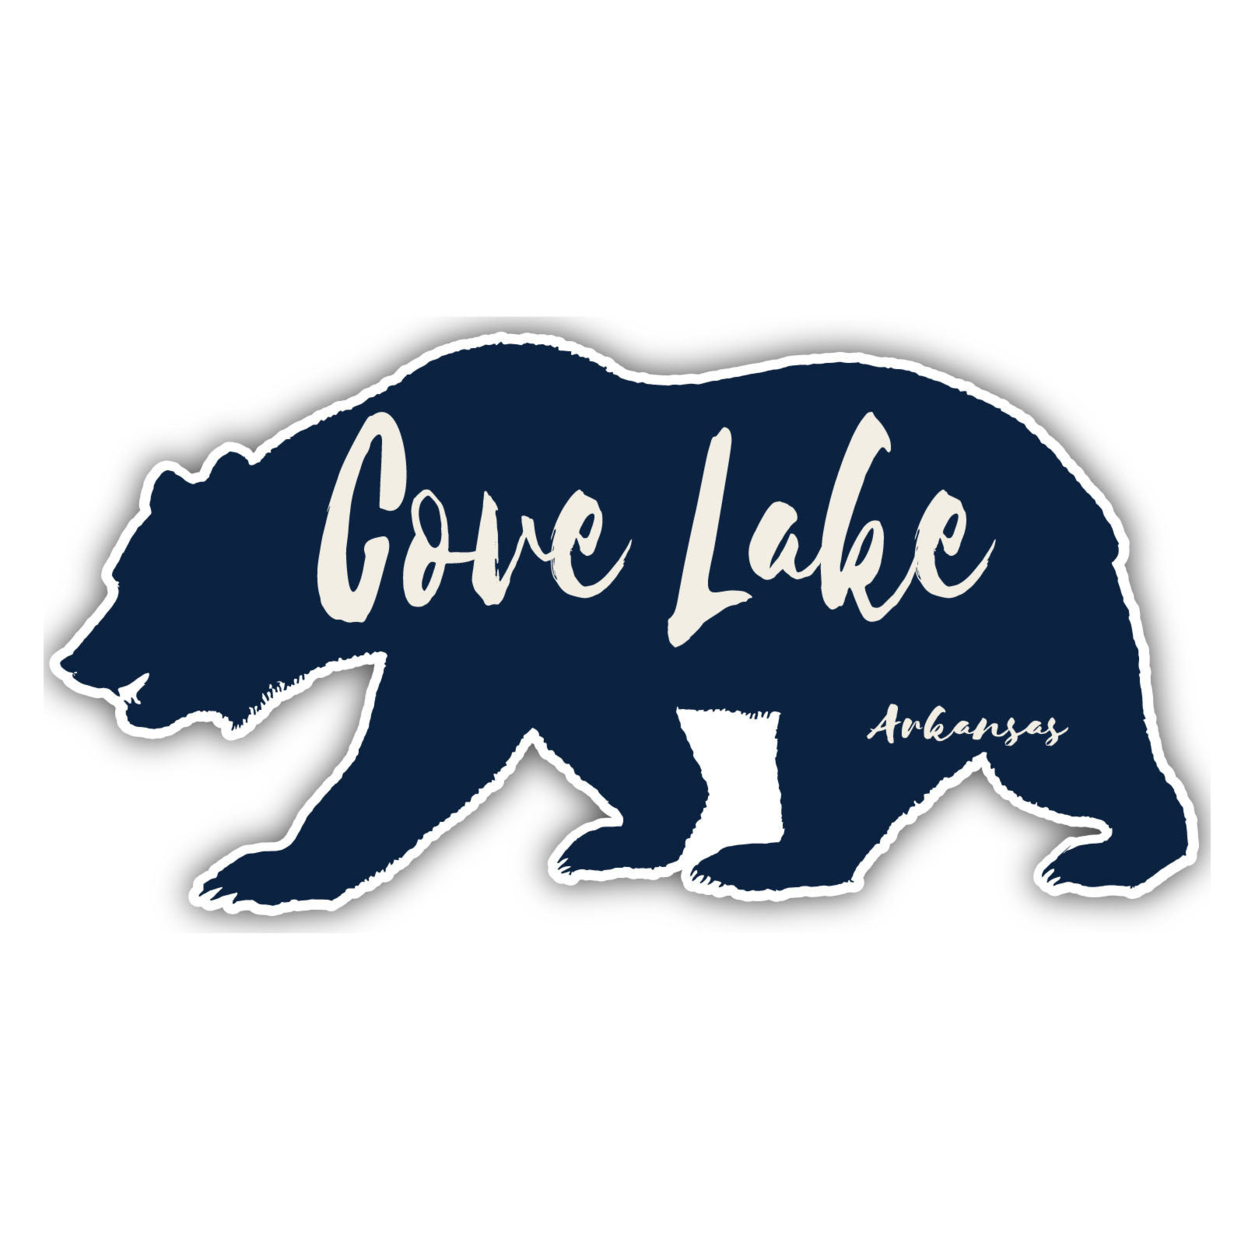 Cove Lake Arkansas Souvenir Decorative Stickers (Choose Theme And Size) - Single Unit, 2-Inch, Bear